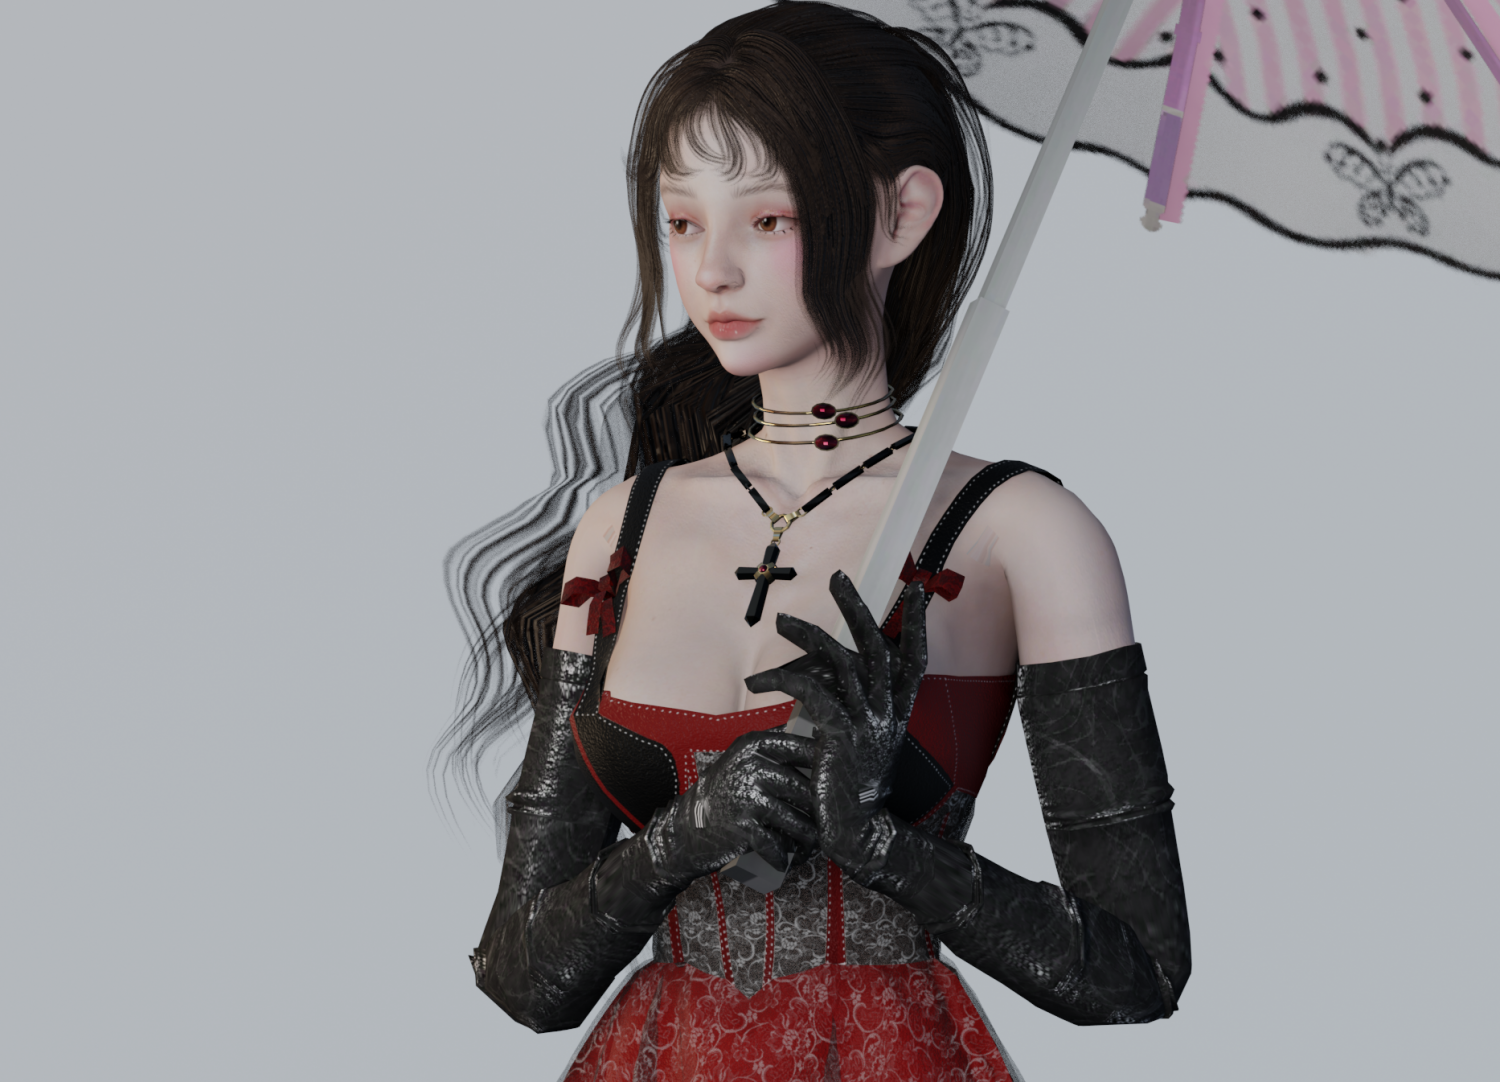 Vampire Girl Modular in Characters - UE Marketplace